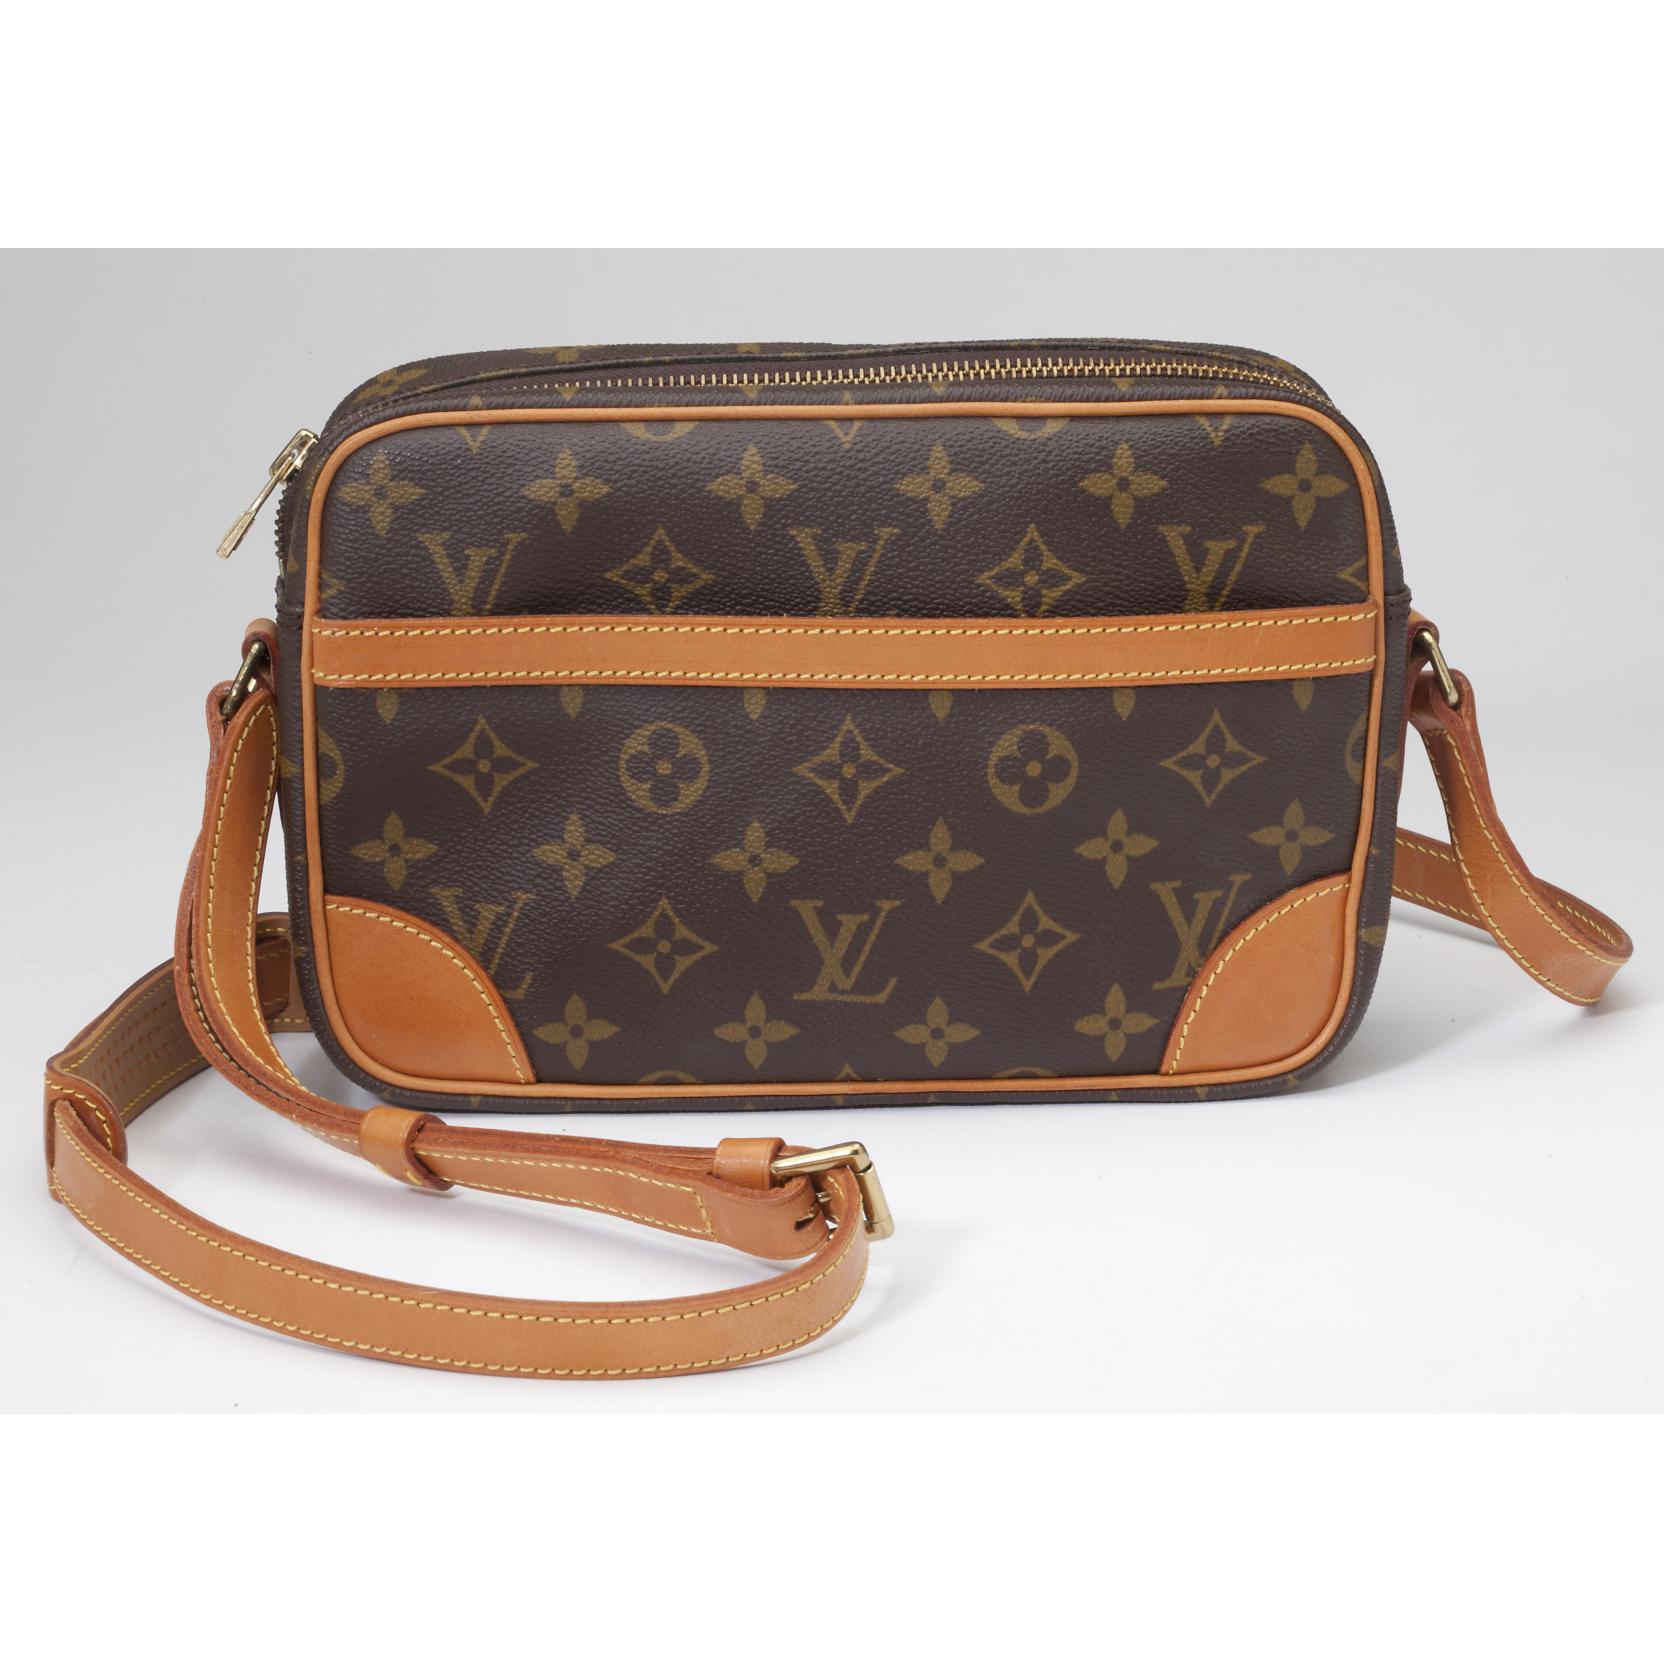 Sold at Auction: Louis Vuitton Monogram Trocadero 27 Bag